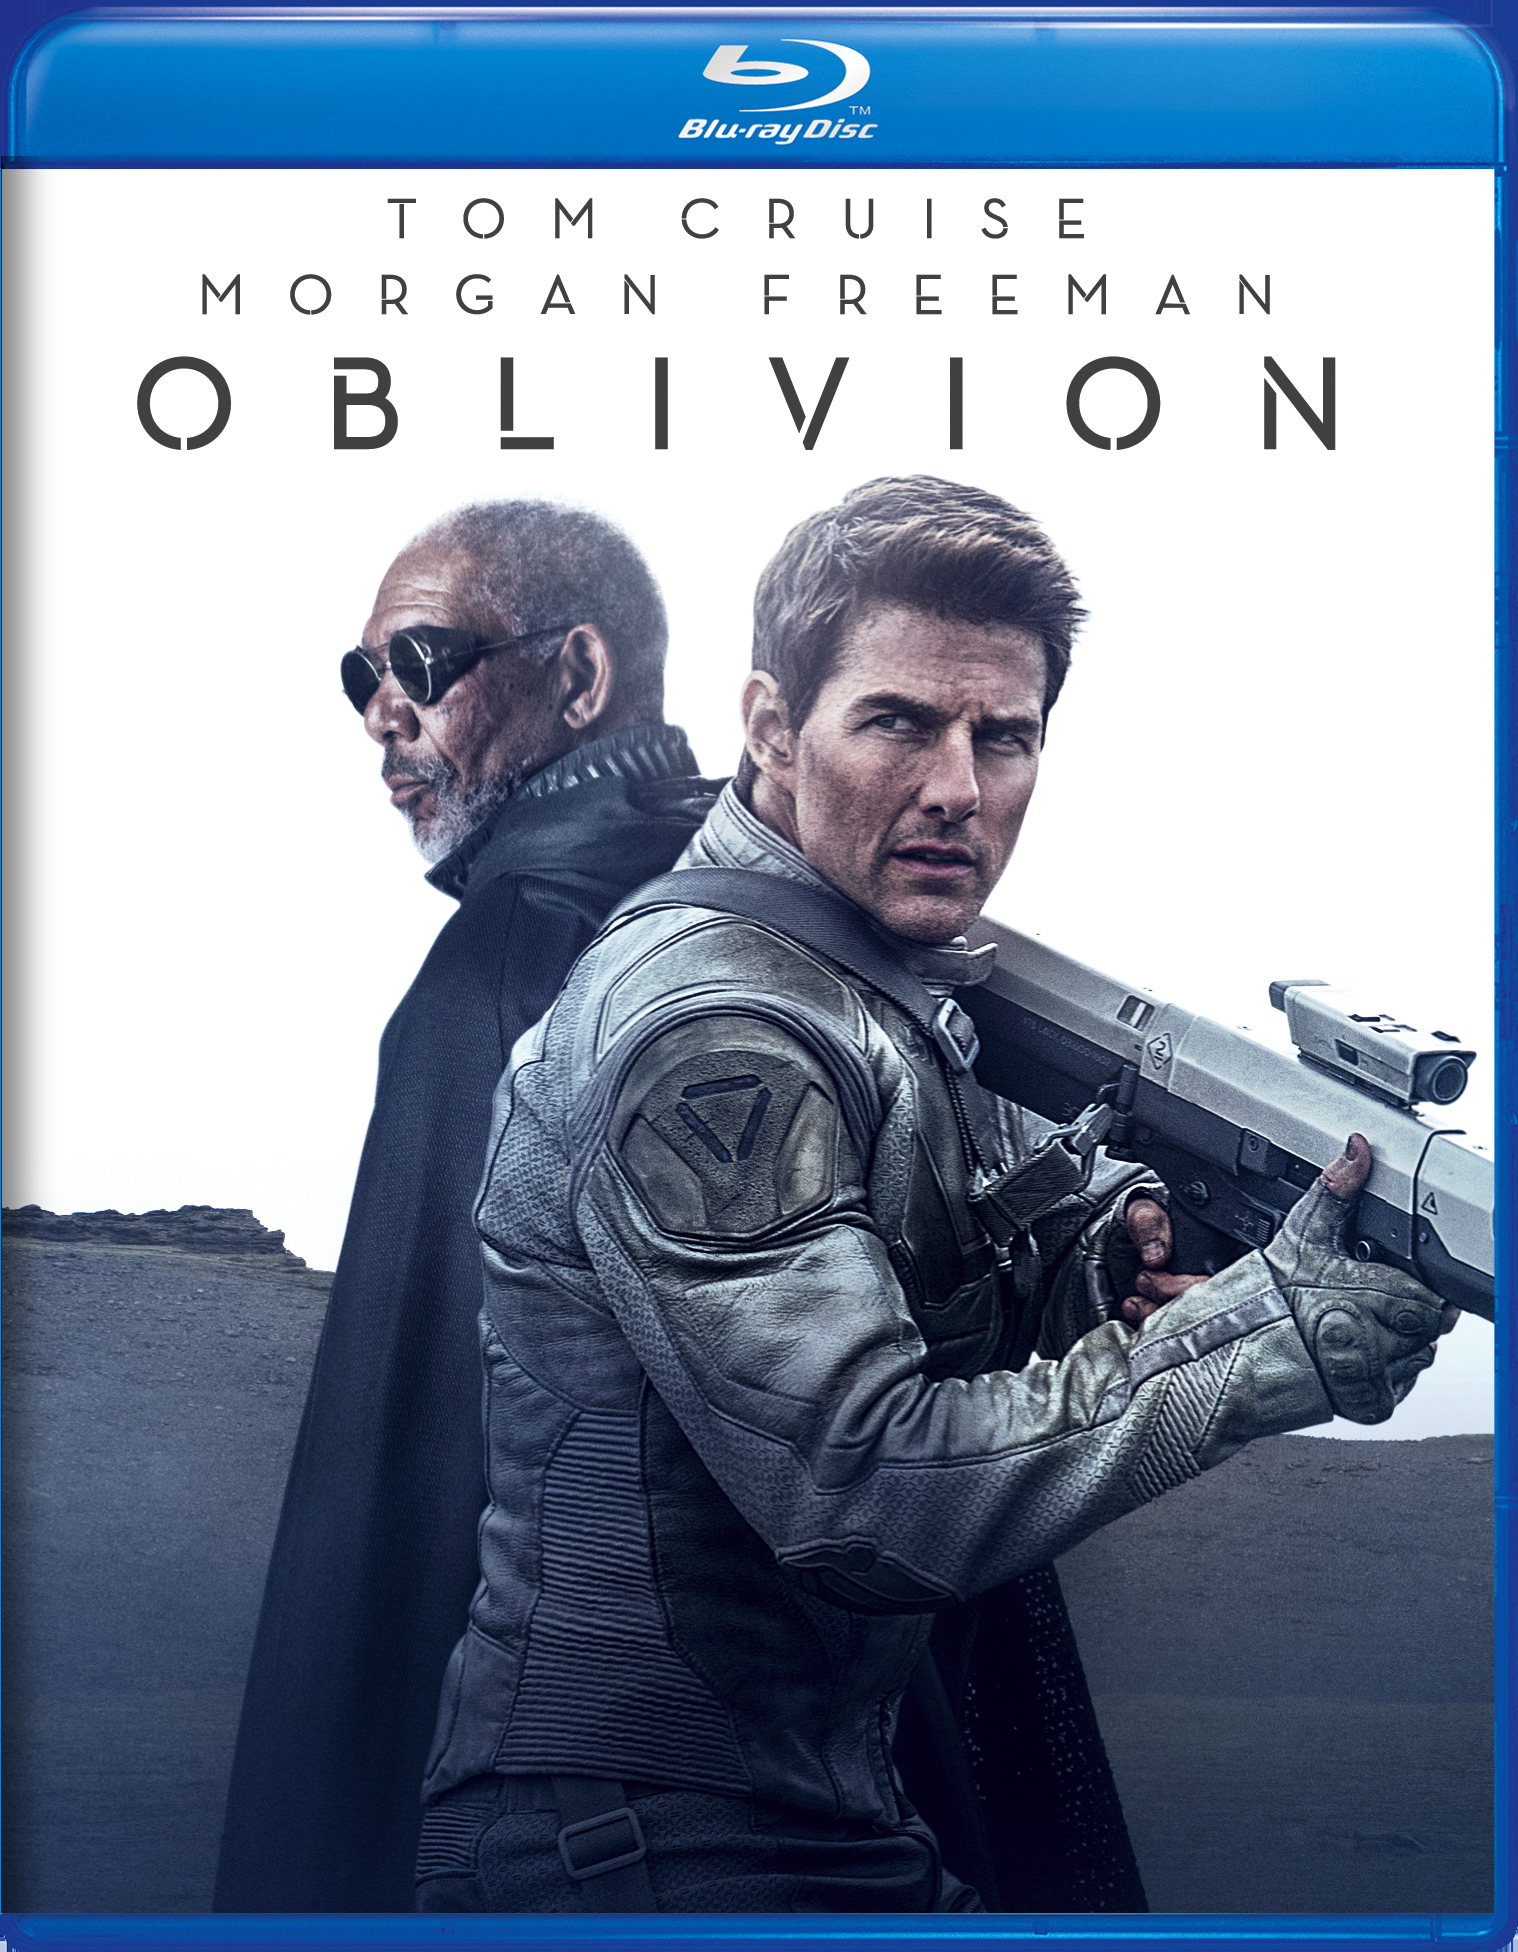 Oblivion (Blu-ray New Box Art) - Blu-ray [ 2013 ]  - Action Movies On Blu-ray - Movies On GRUV